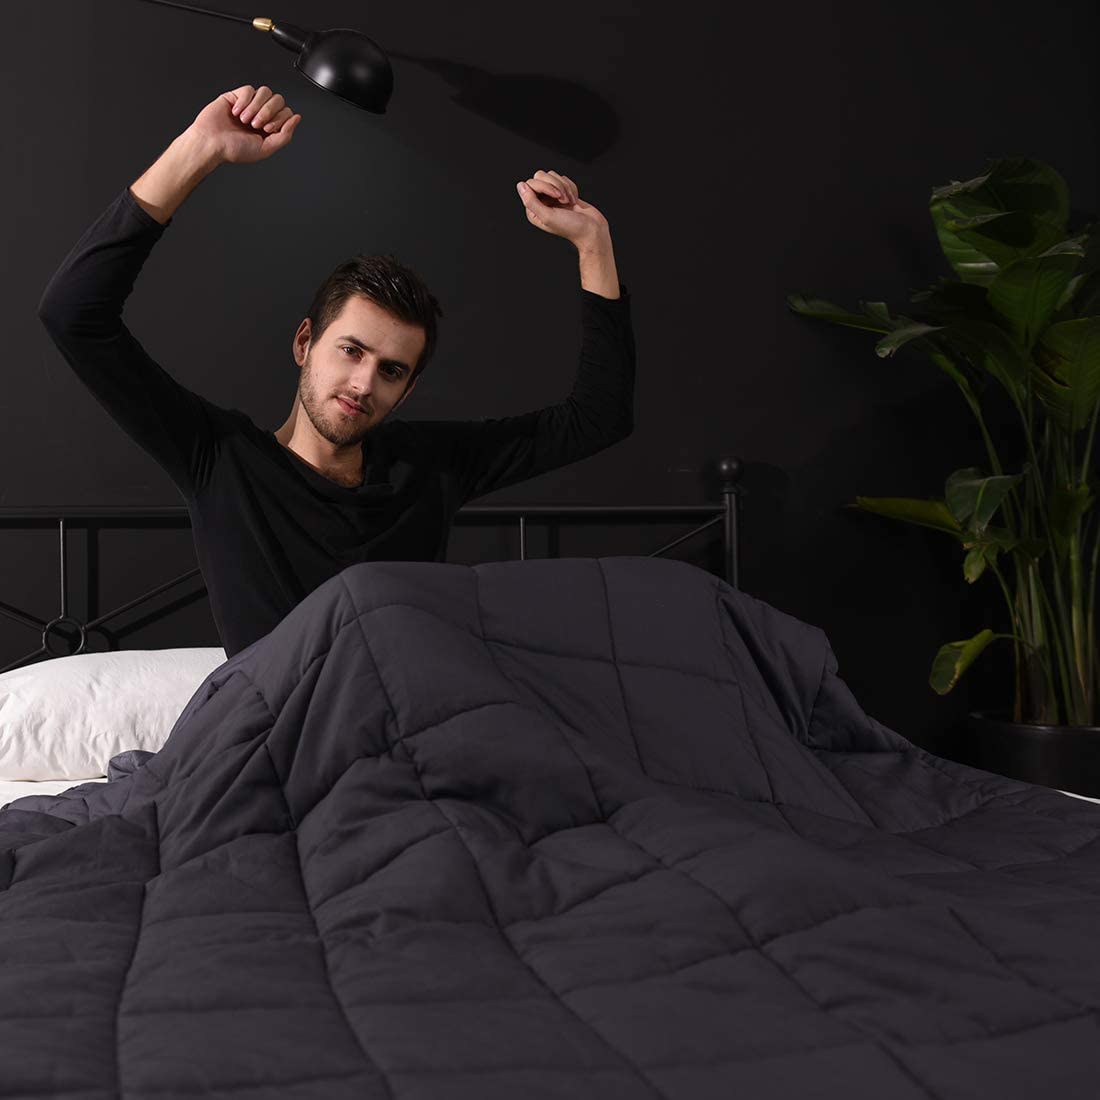 Weighted Blanket - WorkwearToronto.com - Christmas Gift Ideas for guys - Amazon